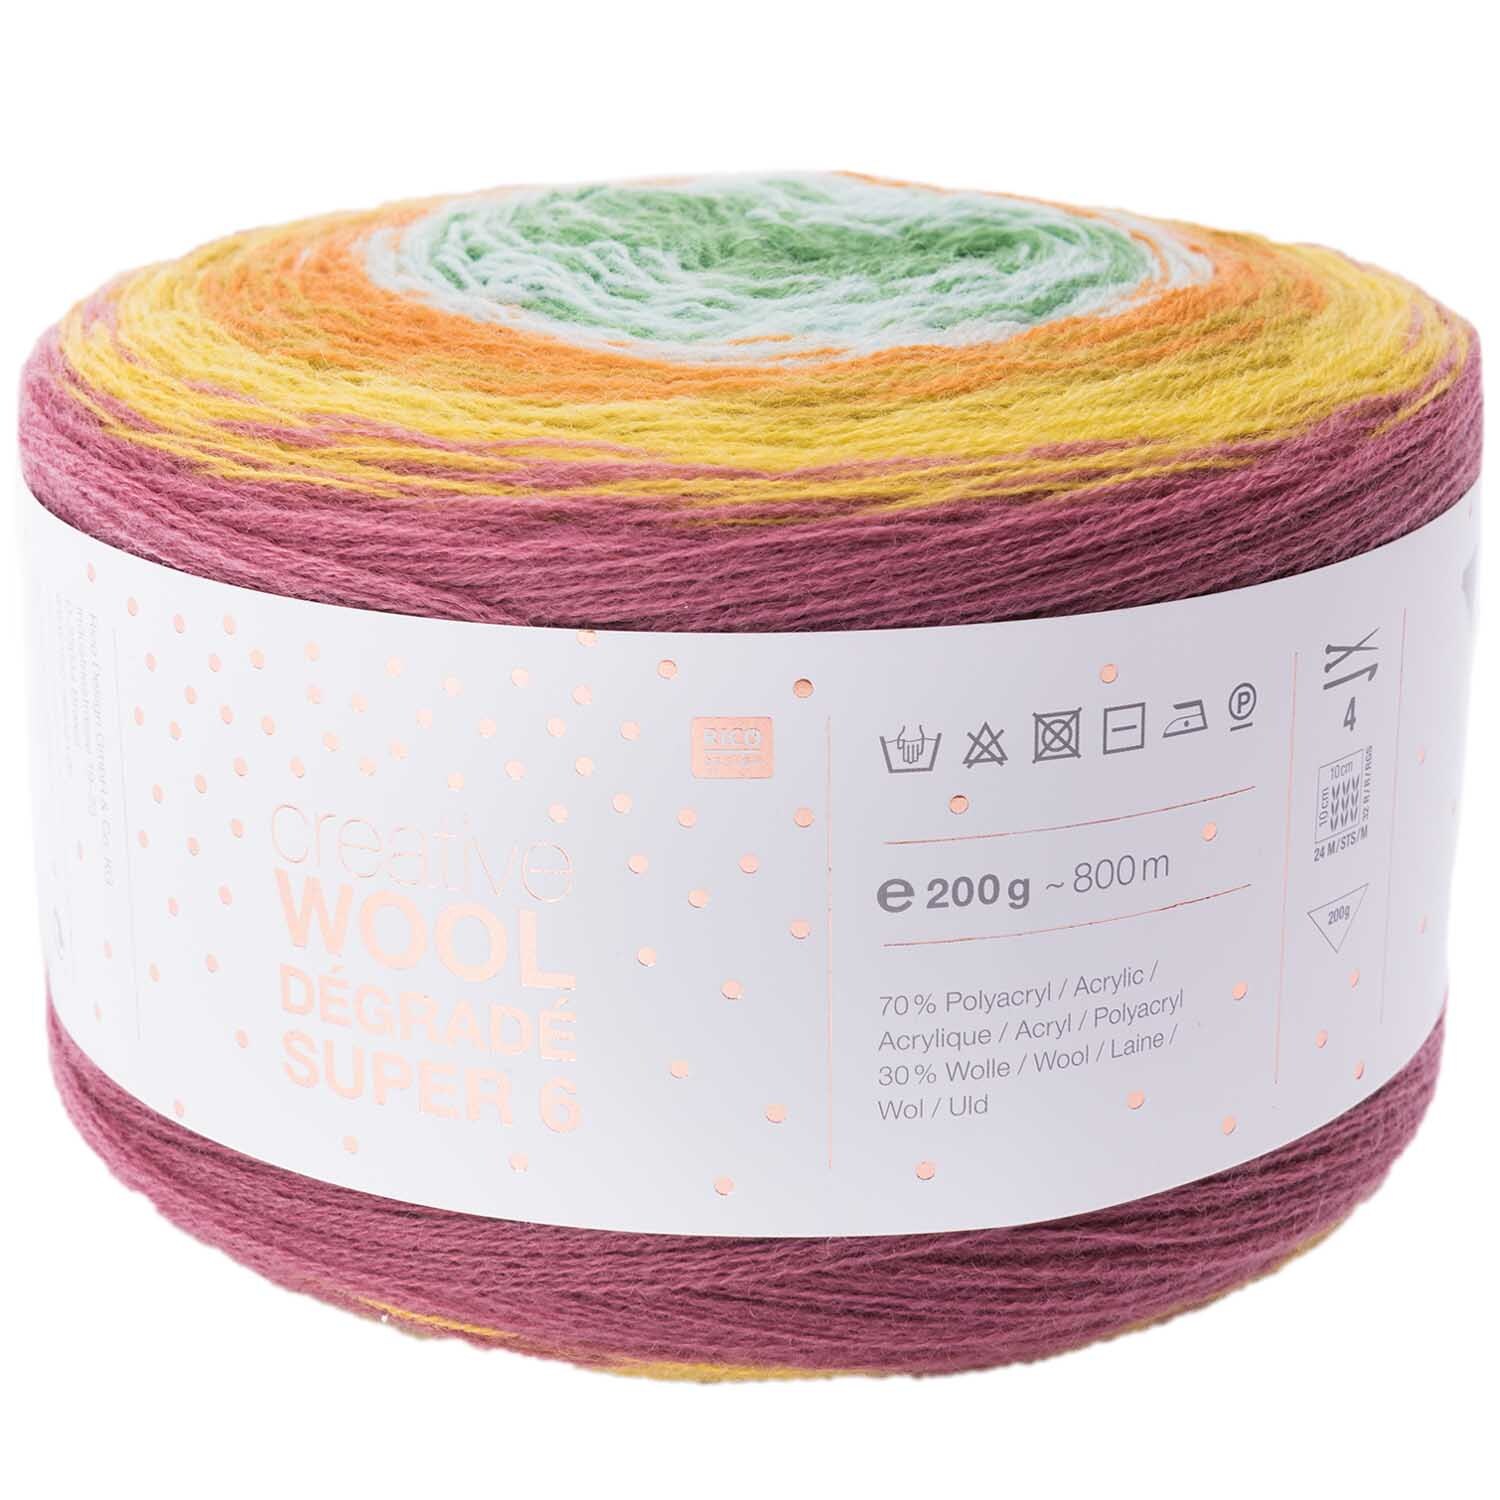 Creative Wool Dégradé Super6